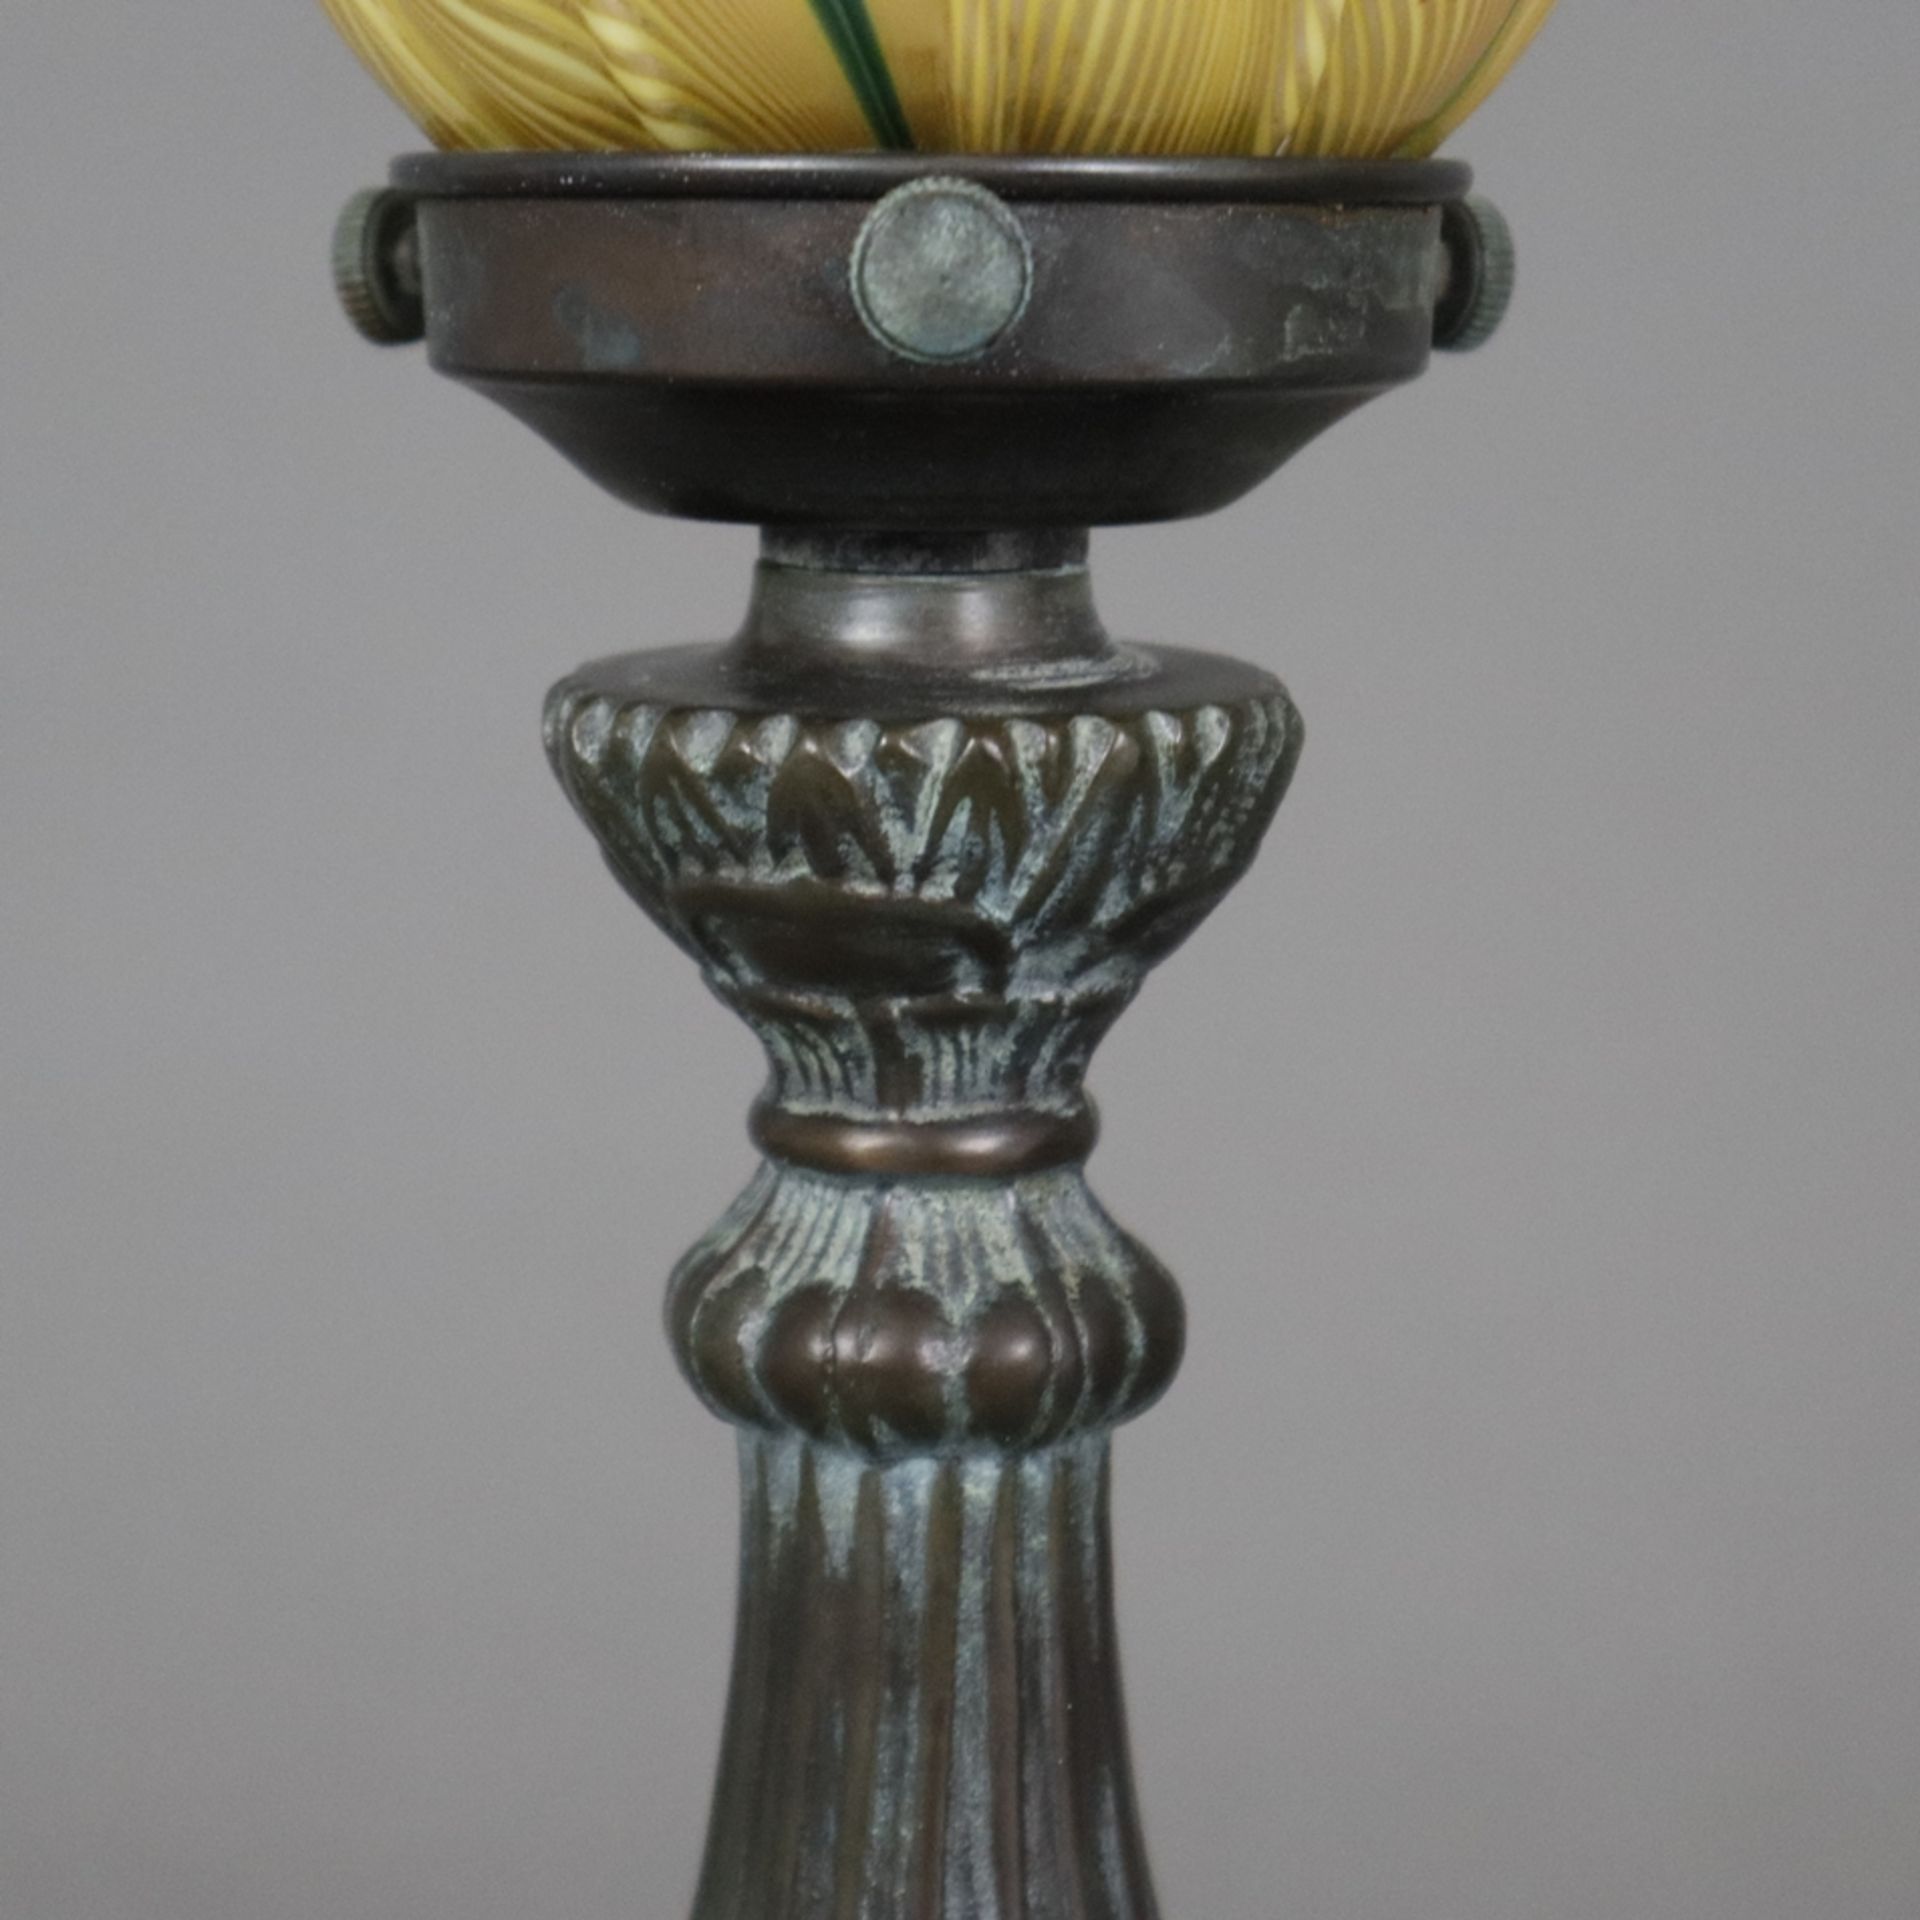 Jugendstil Tischlampe - um 1900/10, floral reliefierter Metallfuß, bronziert, glockenförmiger Glass - Image 4 of 7